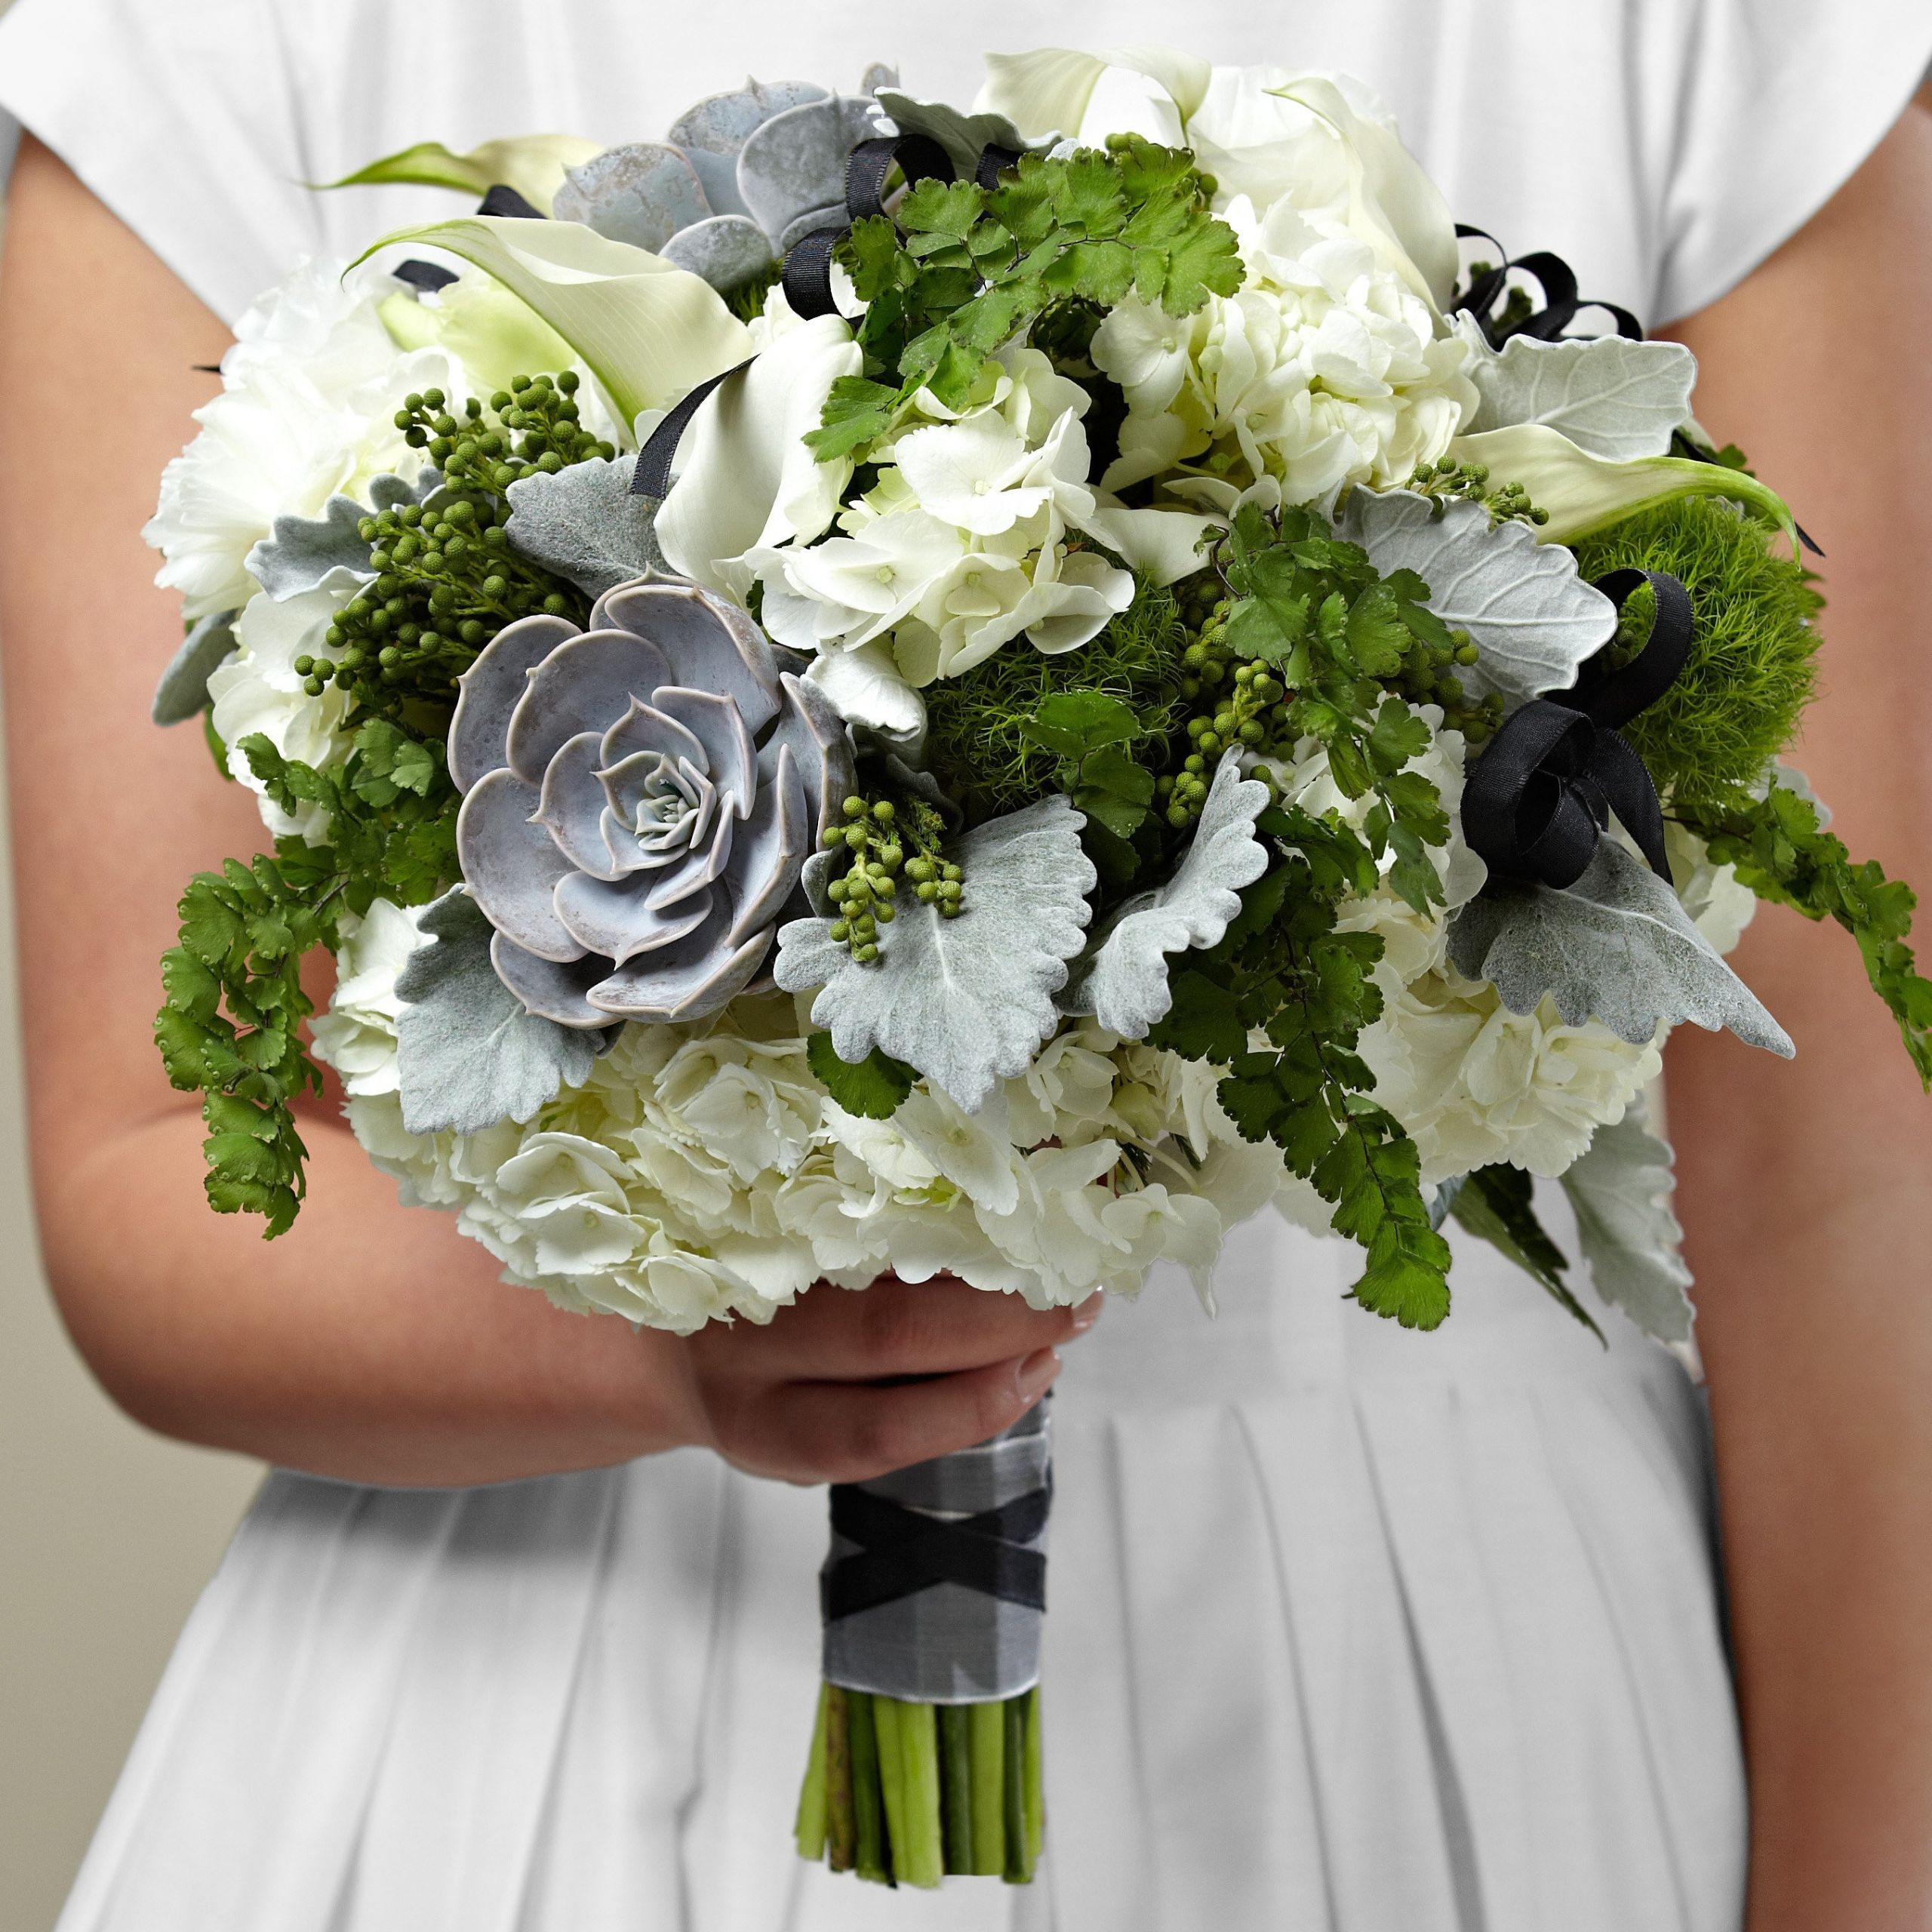 Affordable Wedding Flowers
 Affordable Wedding Flowers